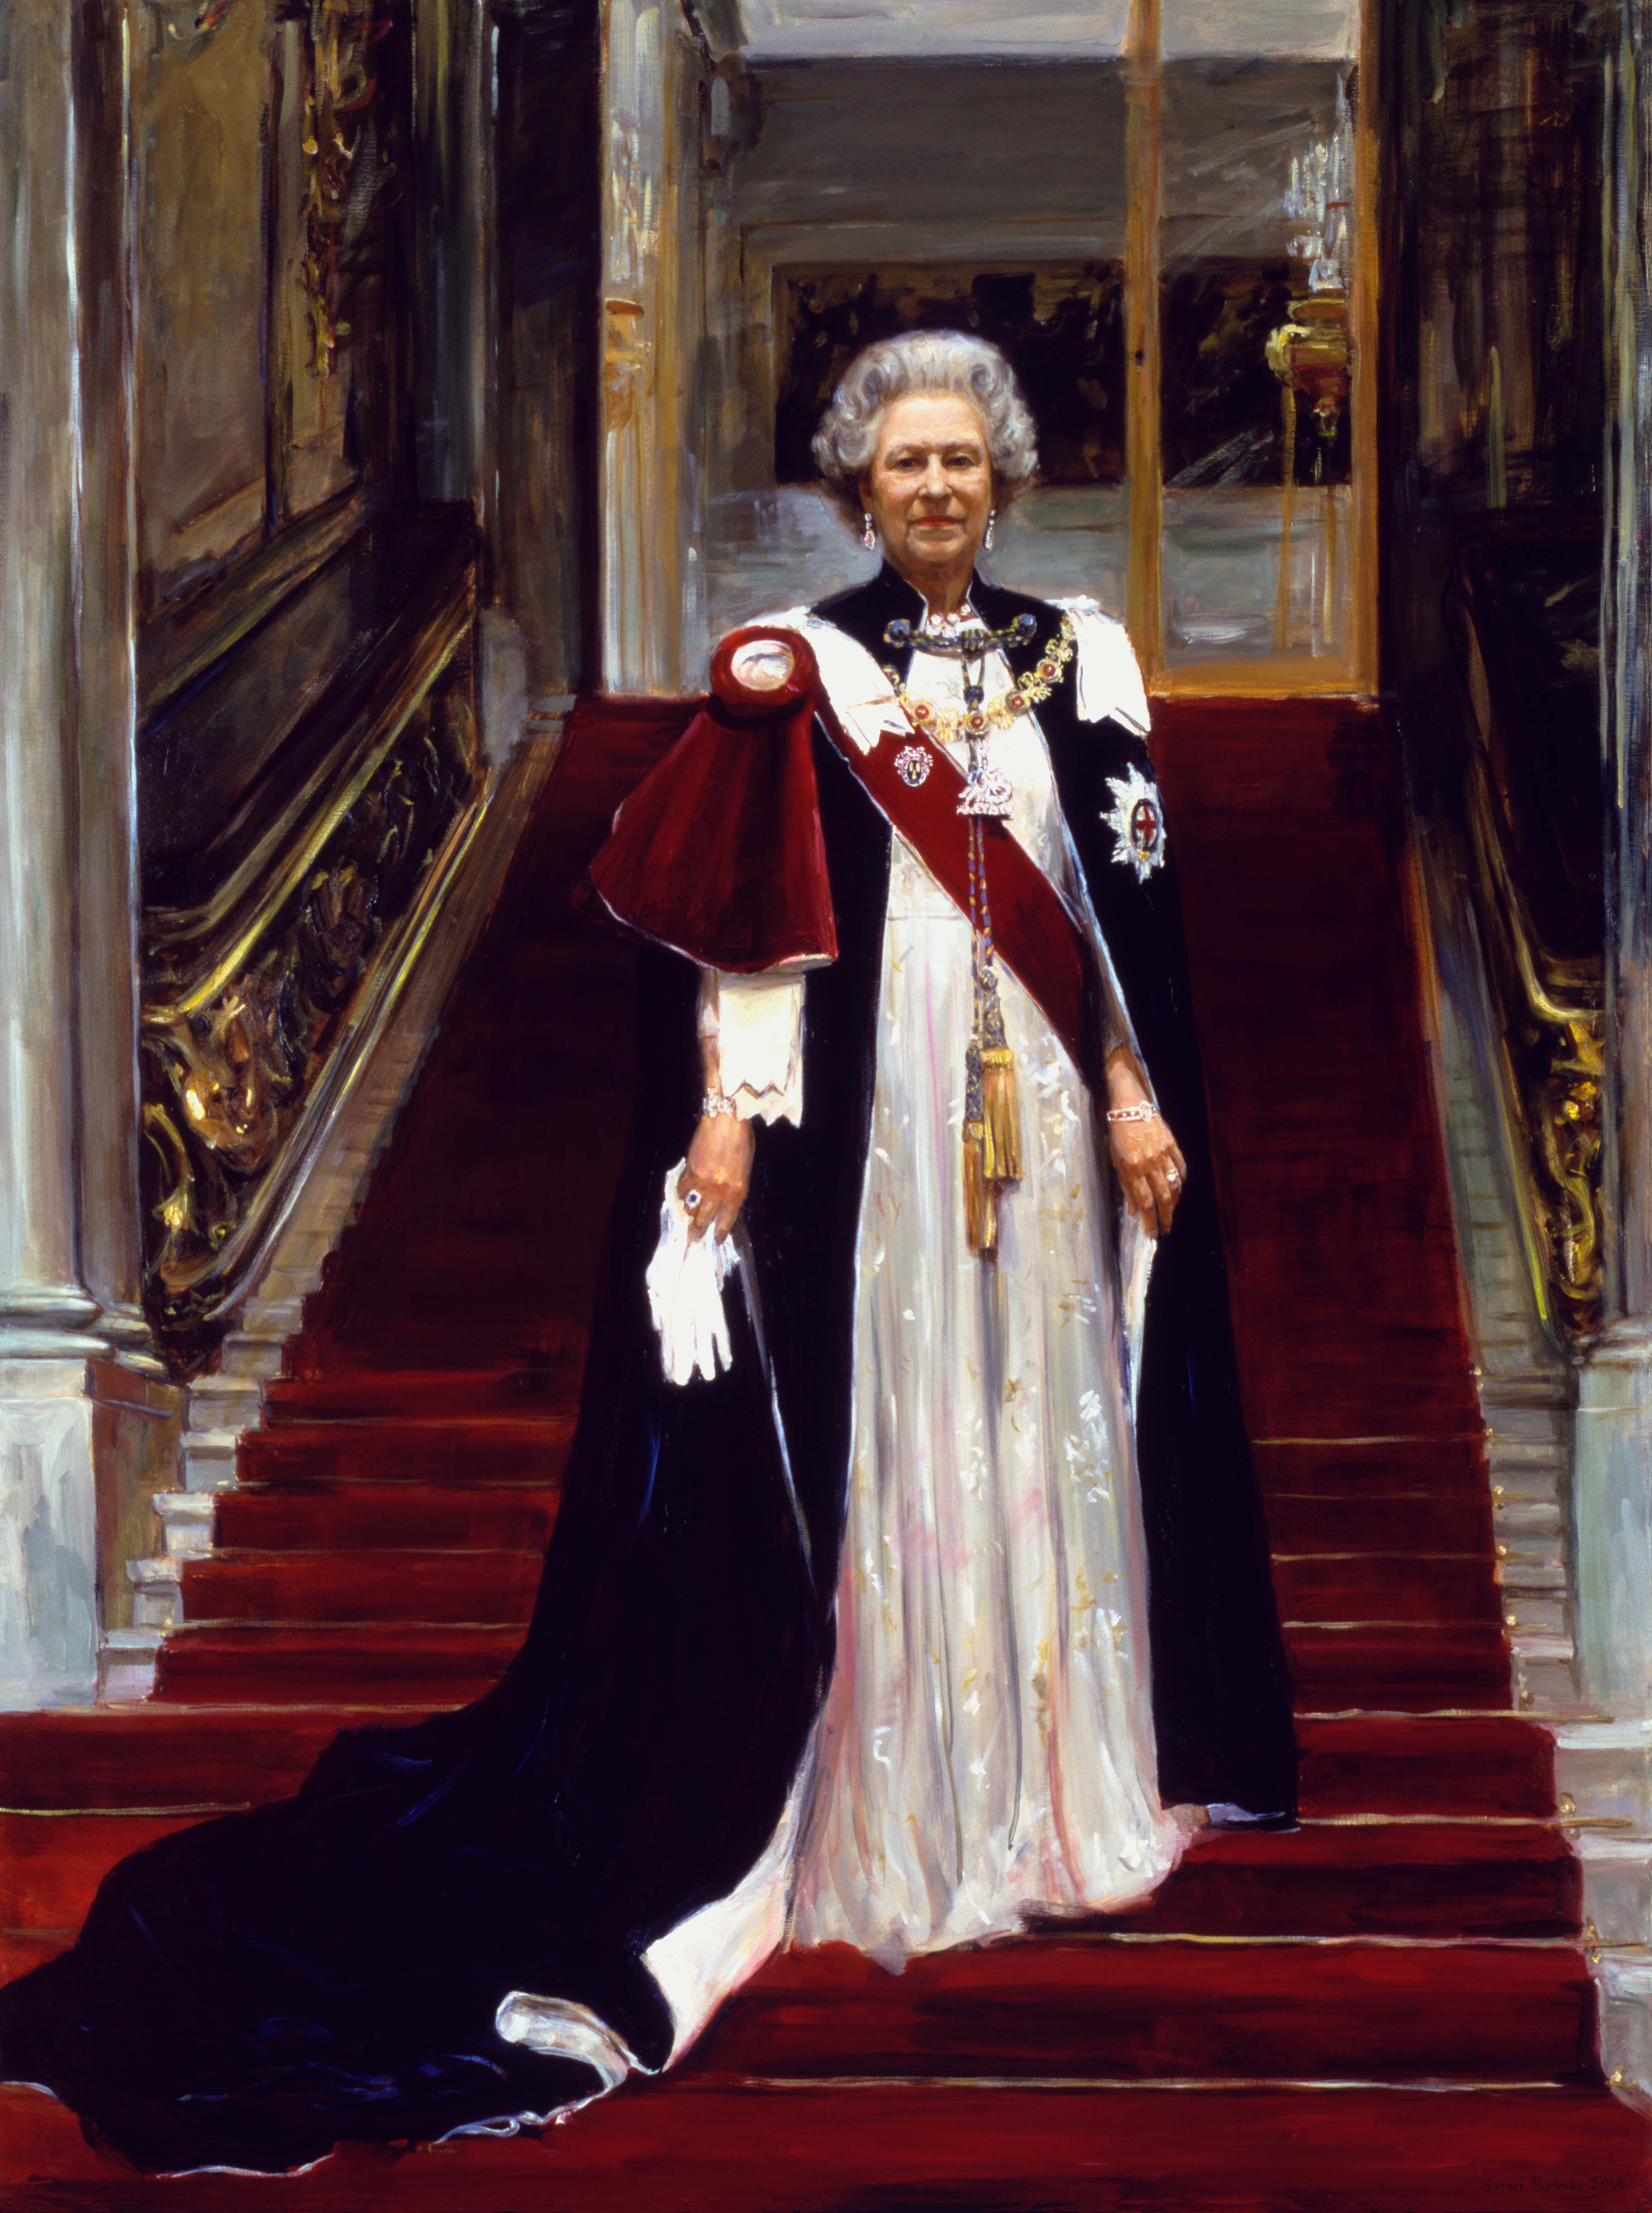 The Portrait of Elizabeth II - 1, Sergei Pavlenko, Buy the painting Oil